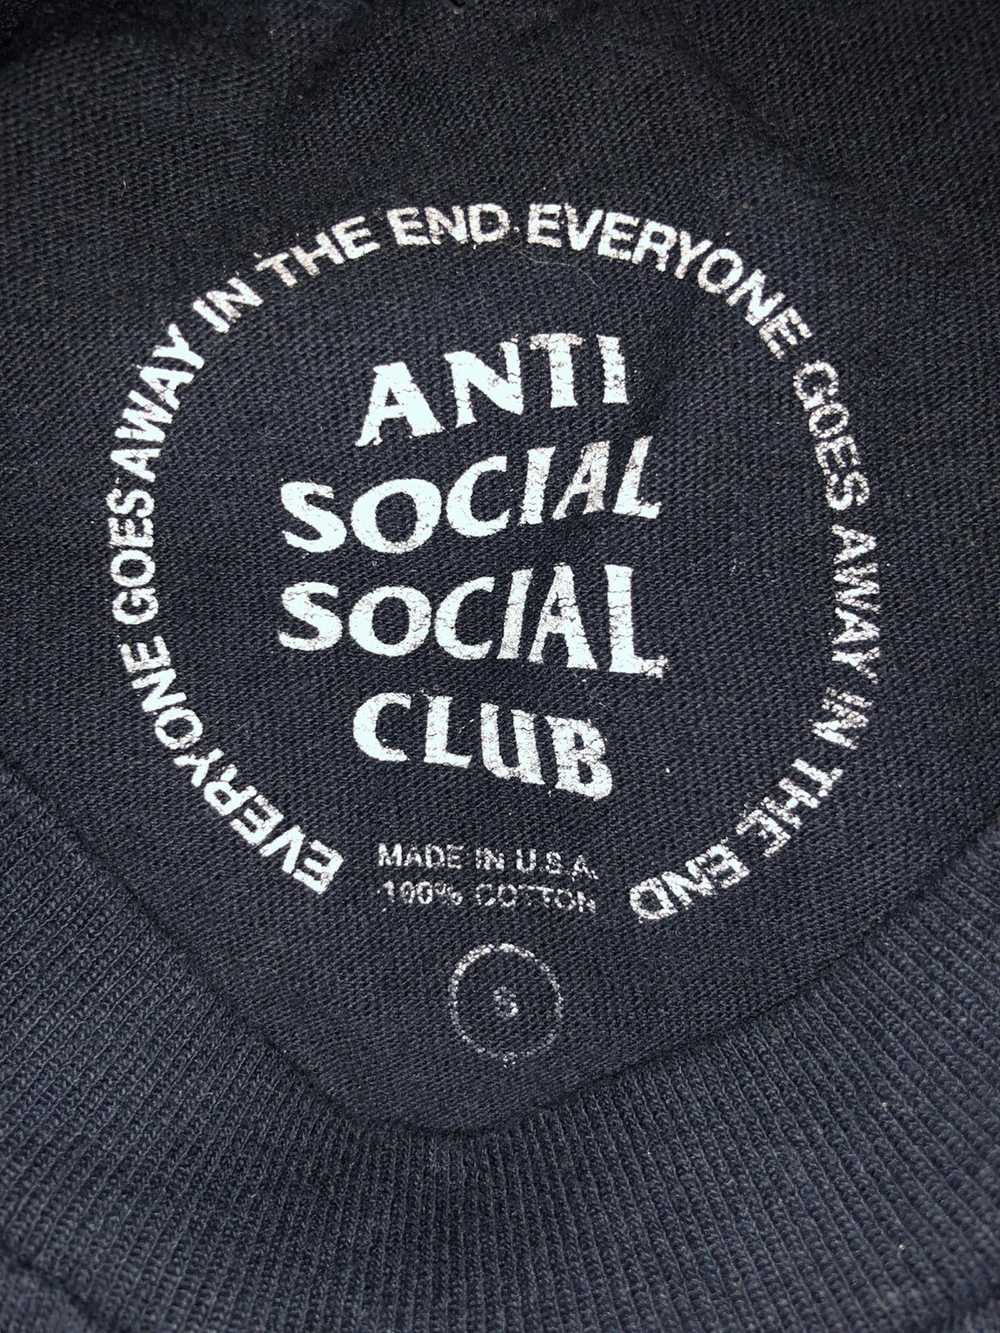 Anti Social Social Club Jackpot Tee - image 3